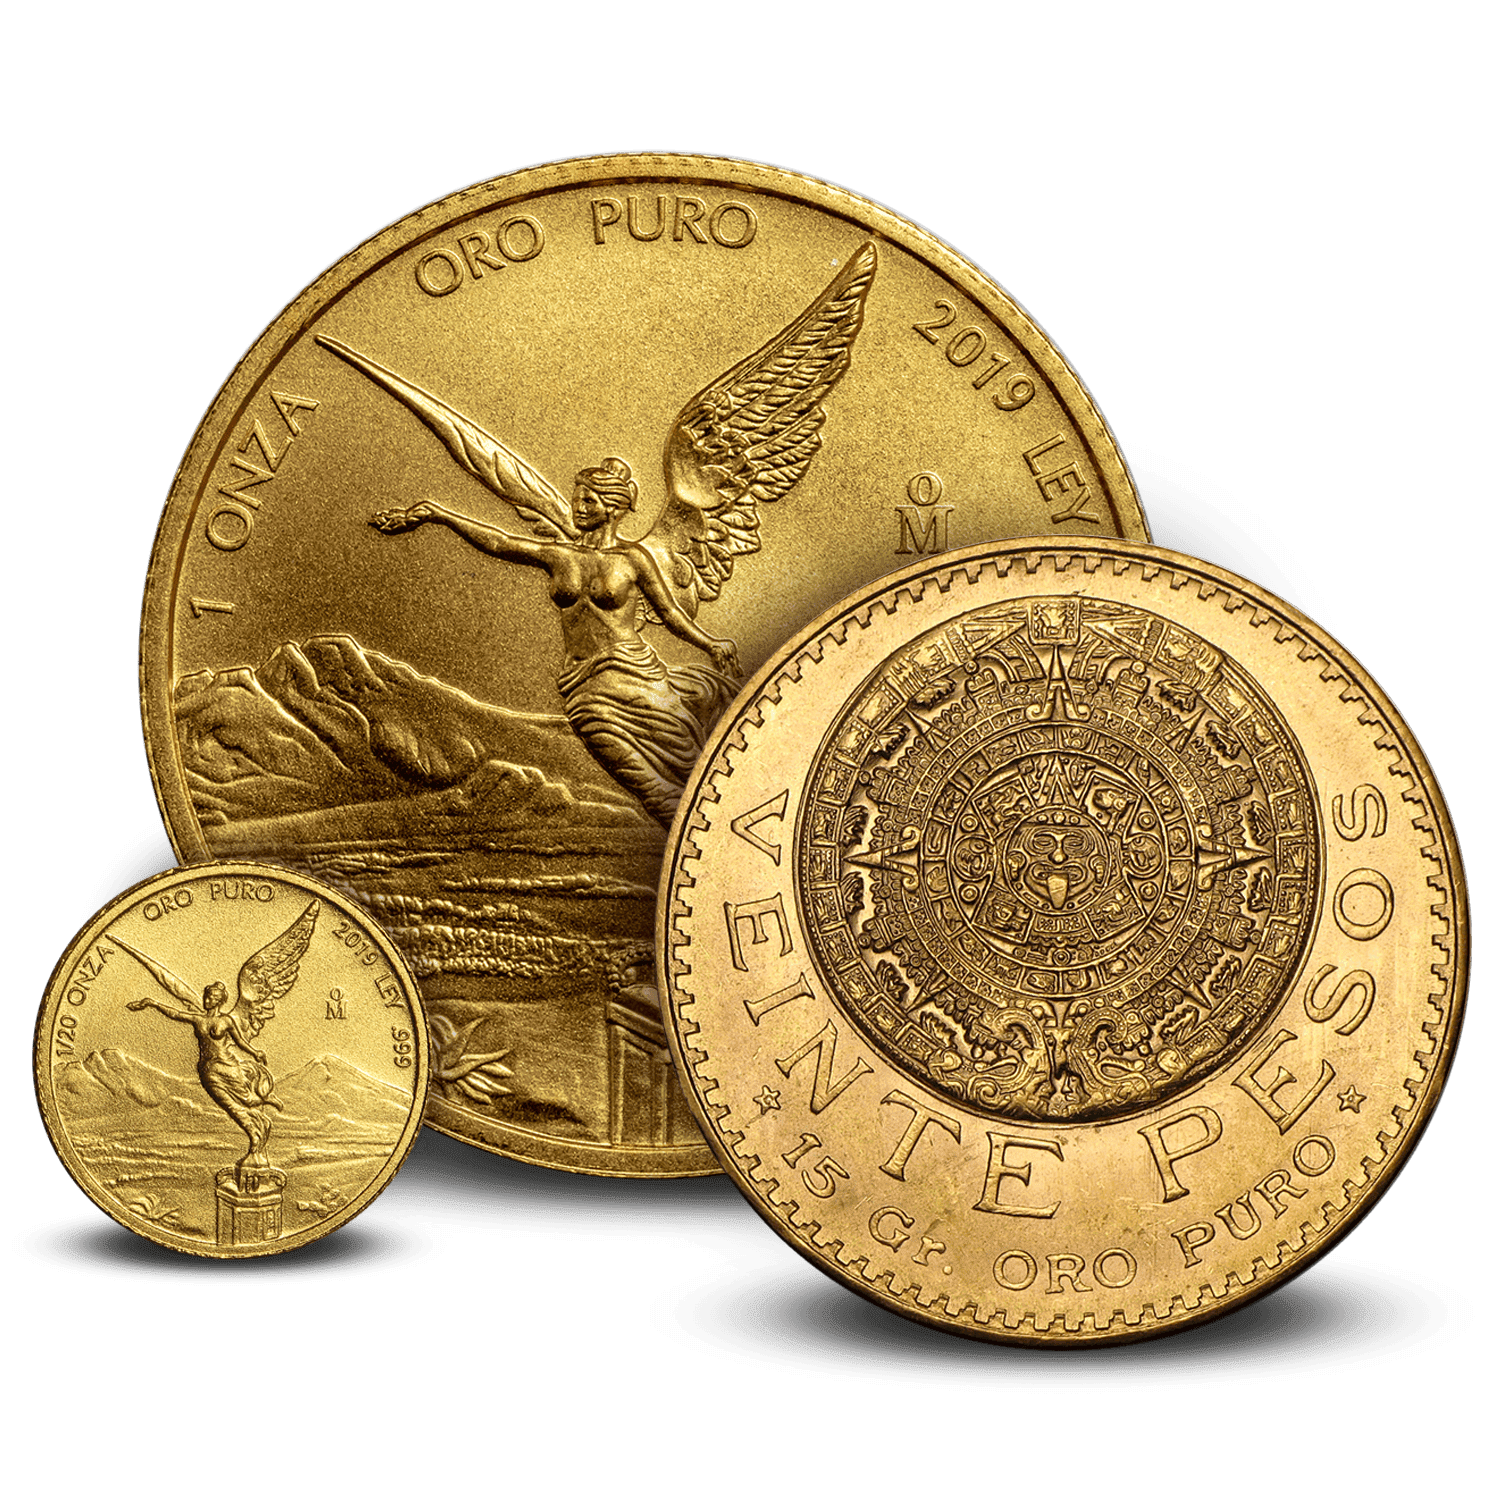 5 Peso Mexican Gold Coin (Random Year, Varied Condition) l JM Bullion™